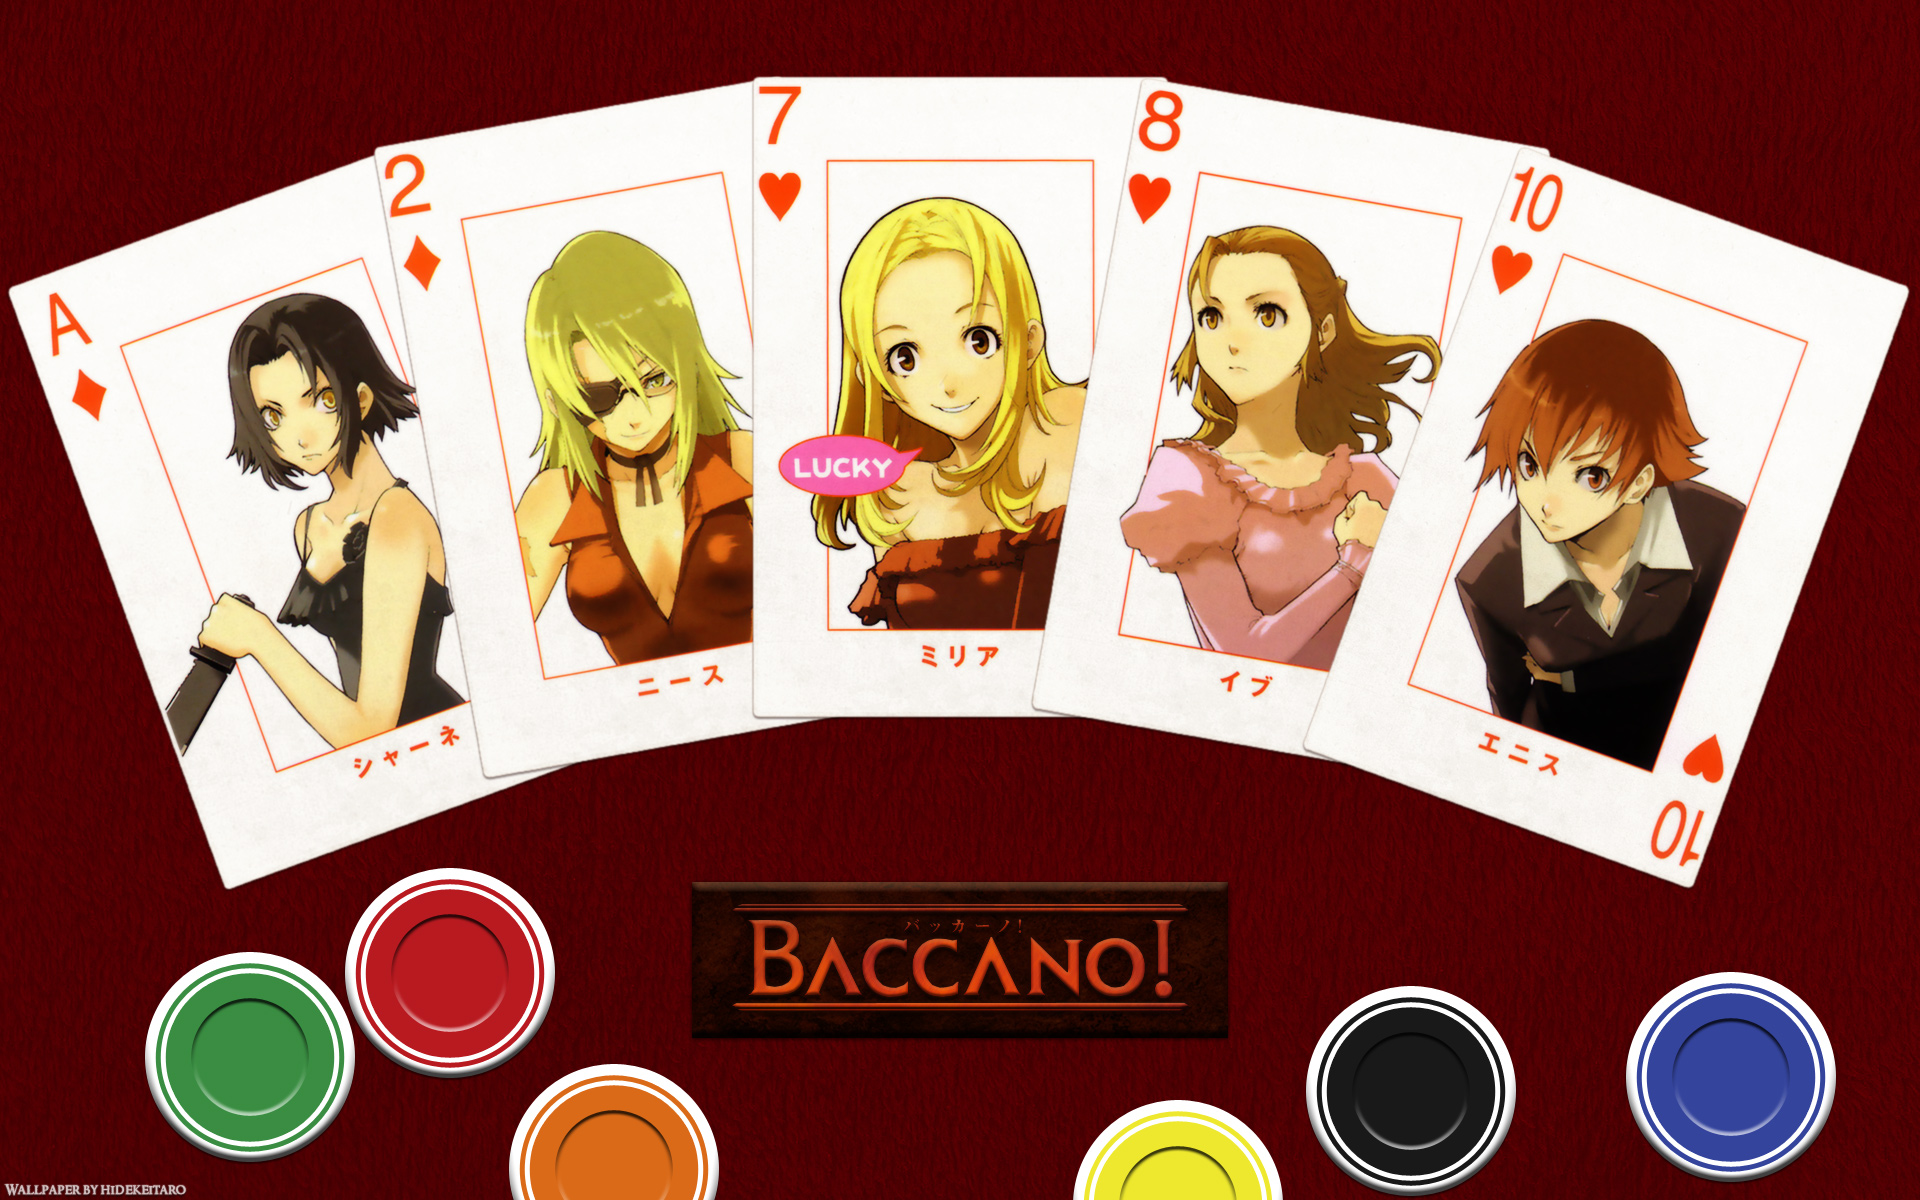 Baccano !, аниме - обои на рабочий стол